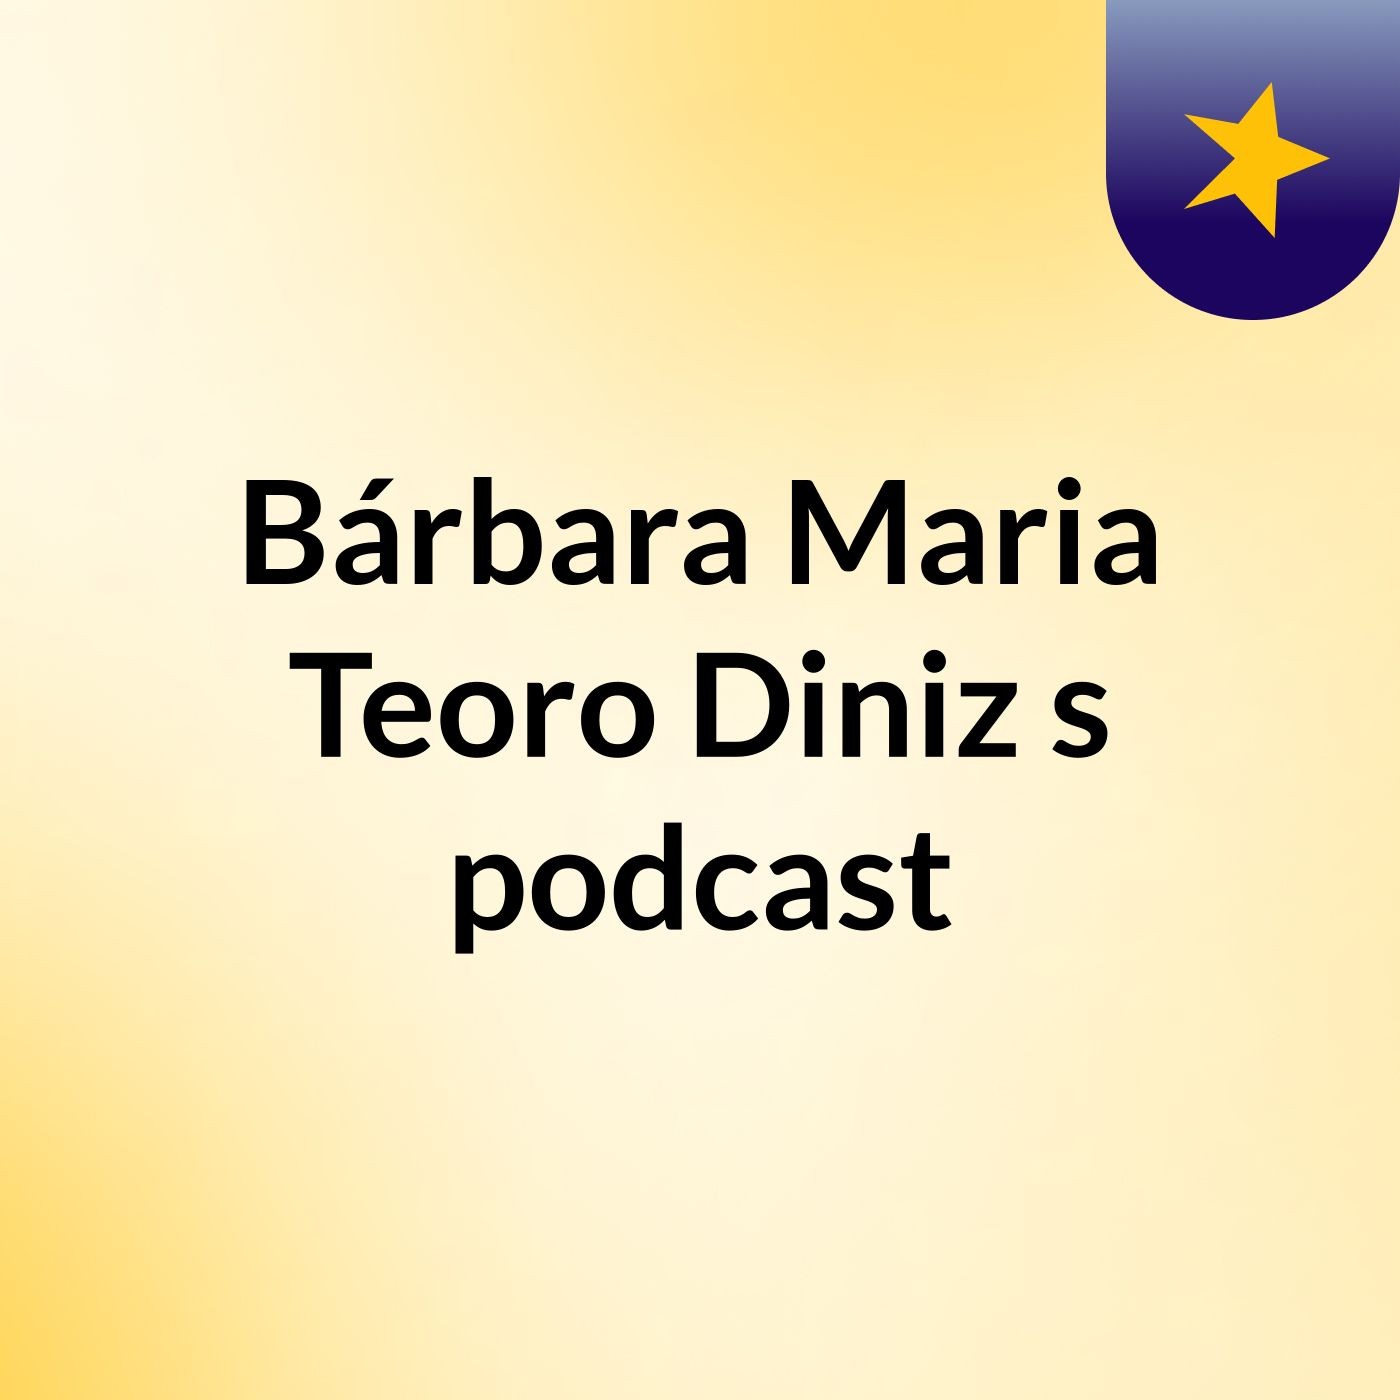 Bárbara Maria Teoro Diniz's podcast